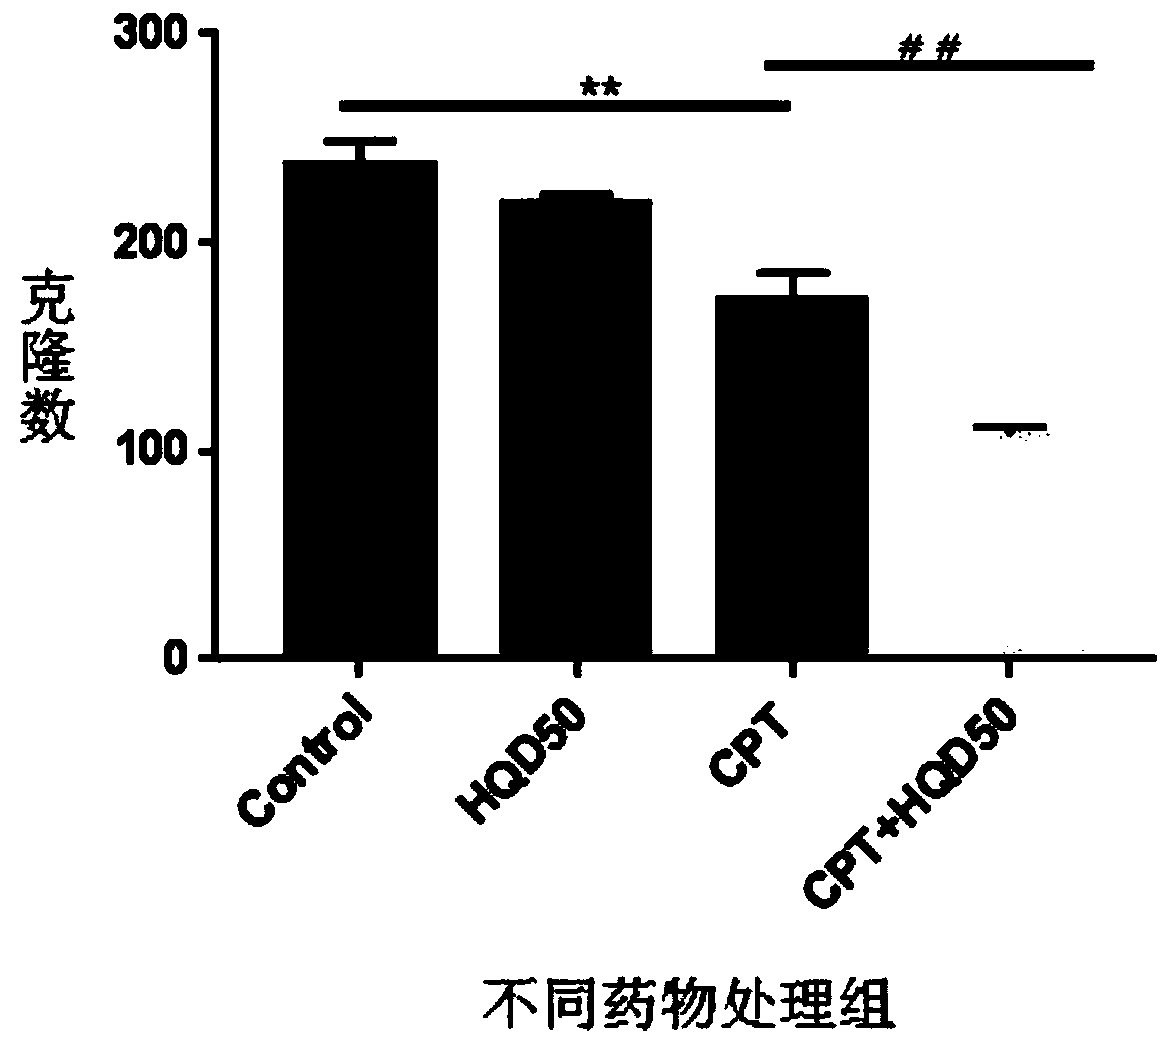 Radix scutellariae soup, and application of equivalent component group of radix scutellariae soup to improvement of chemosensitivity of colon cancer on irinotecan